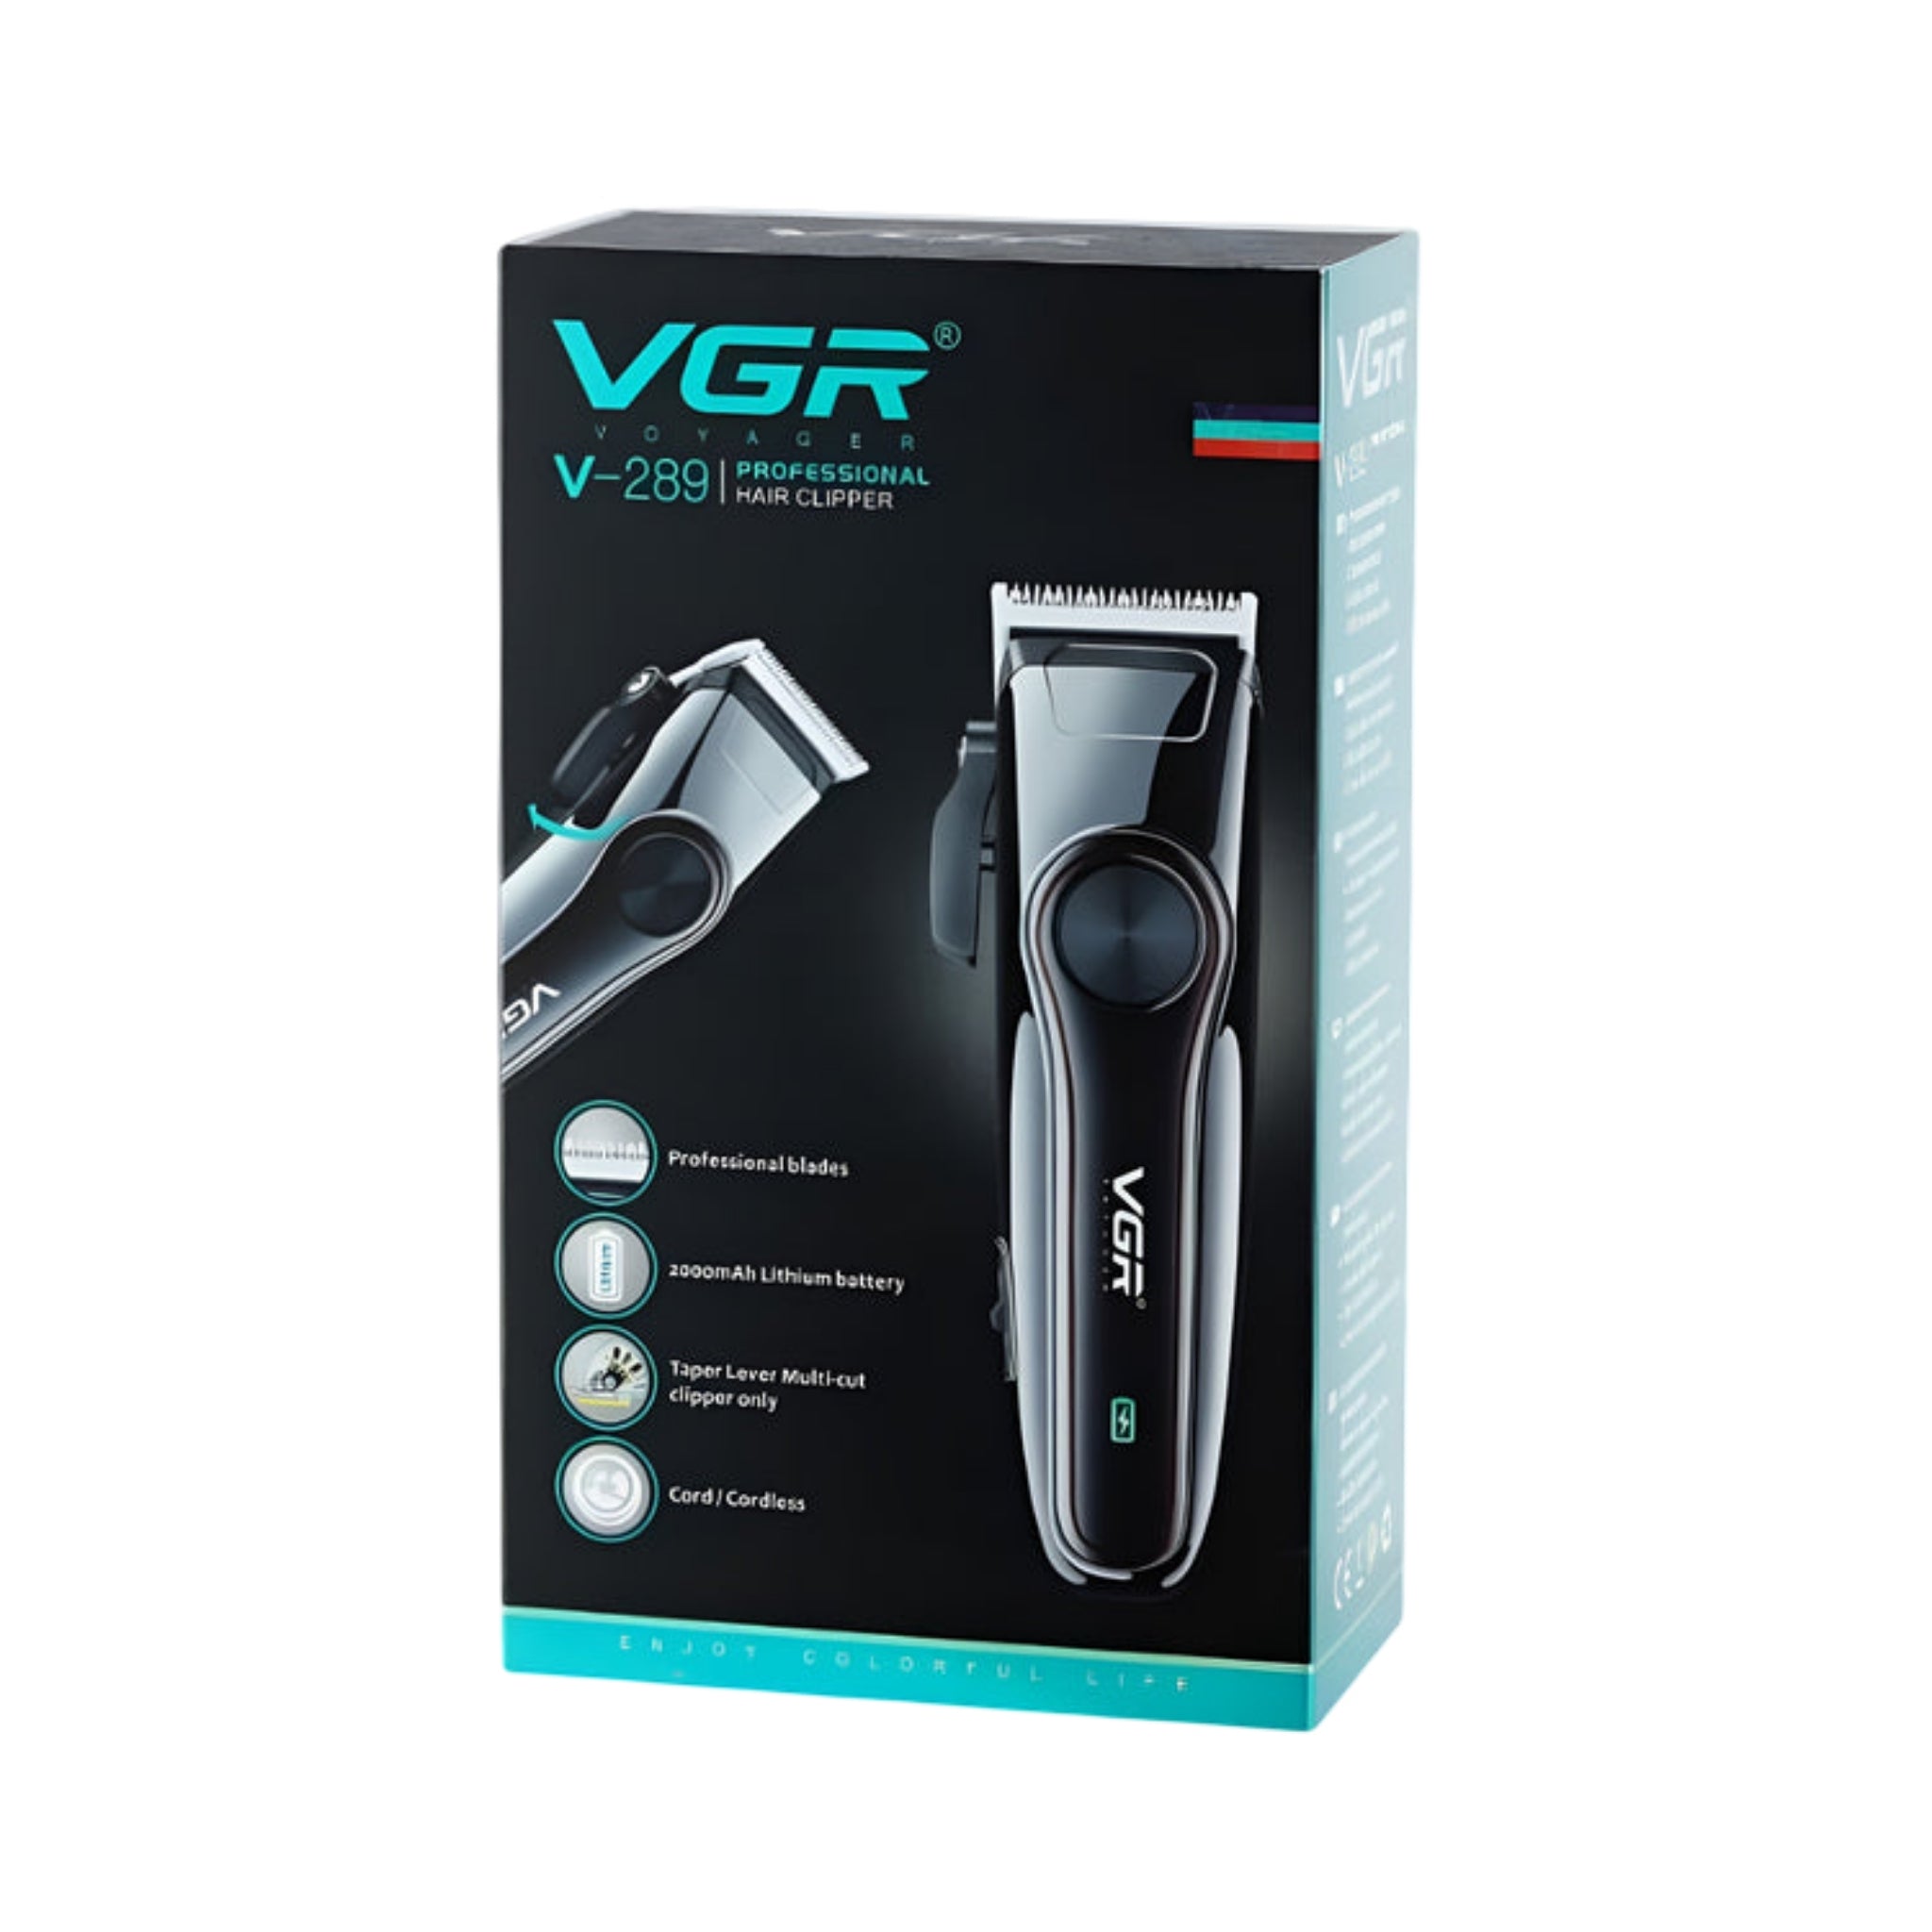 VGR V-289 10W USB Home Portable Hair Clipper - image 1 of 6